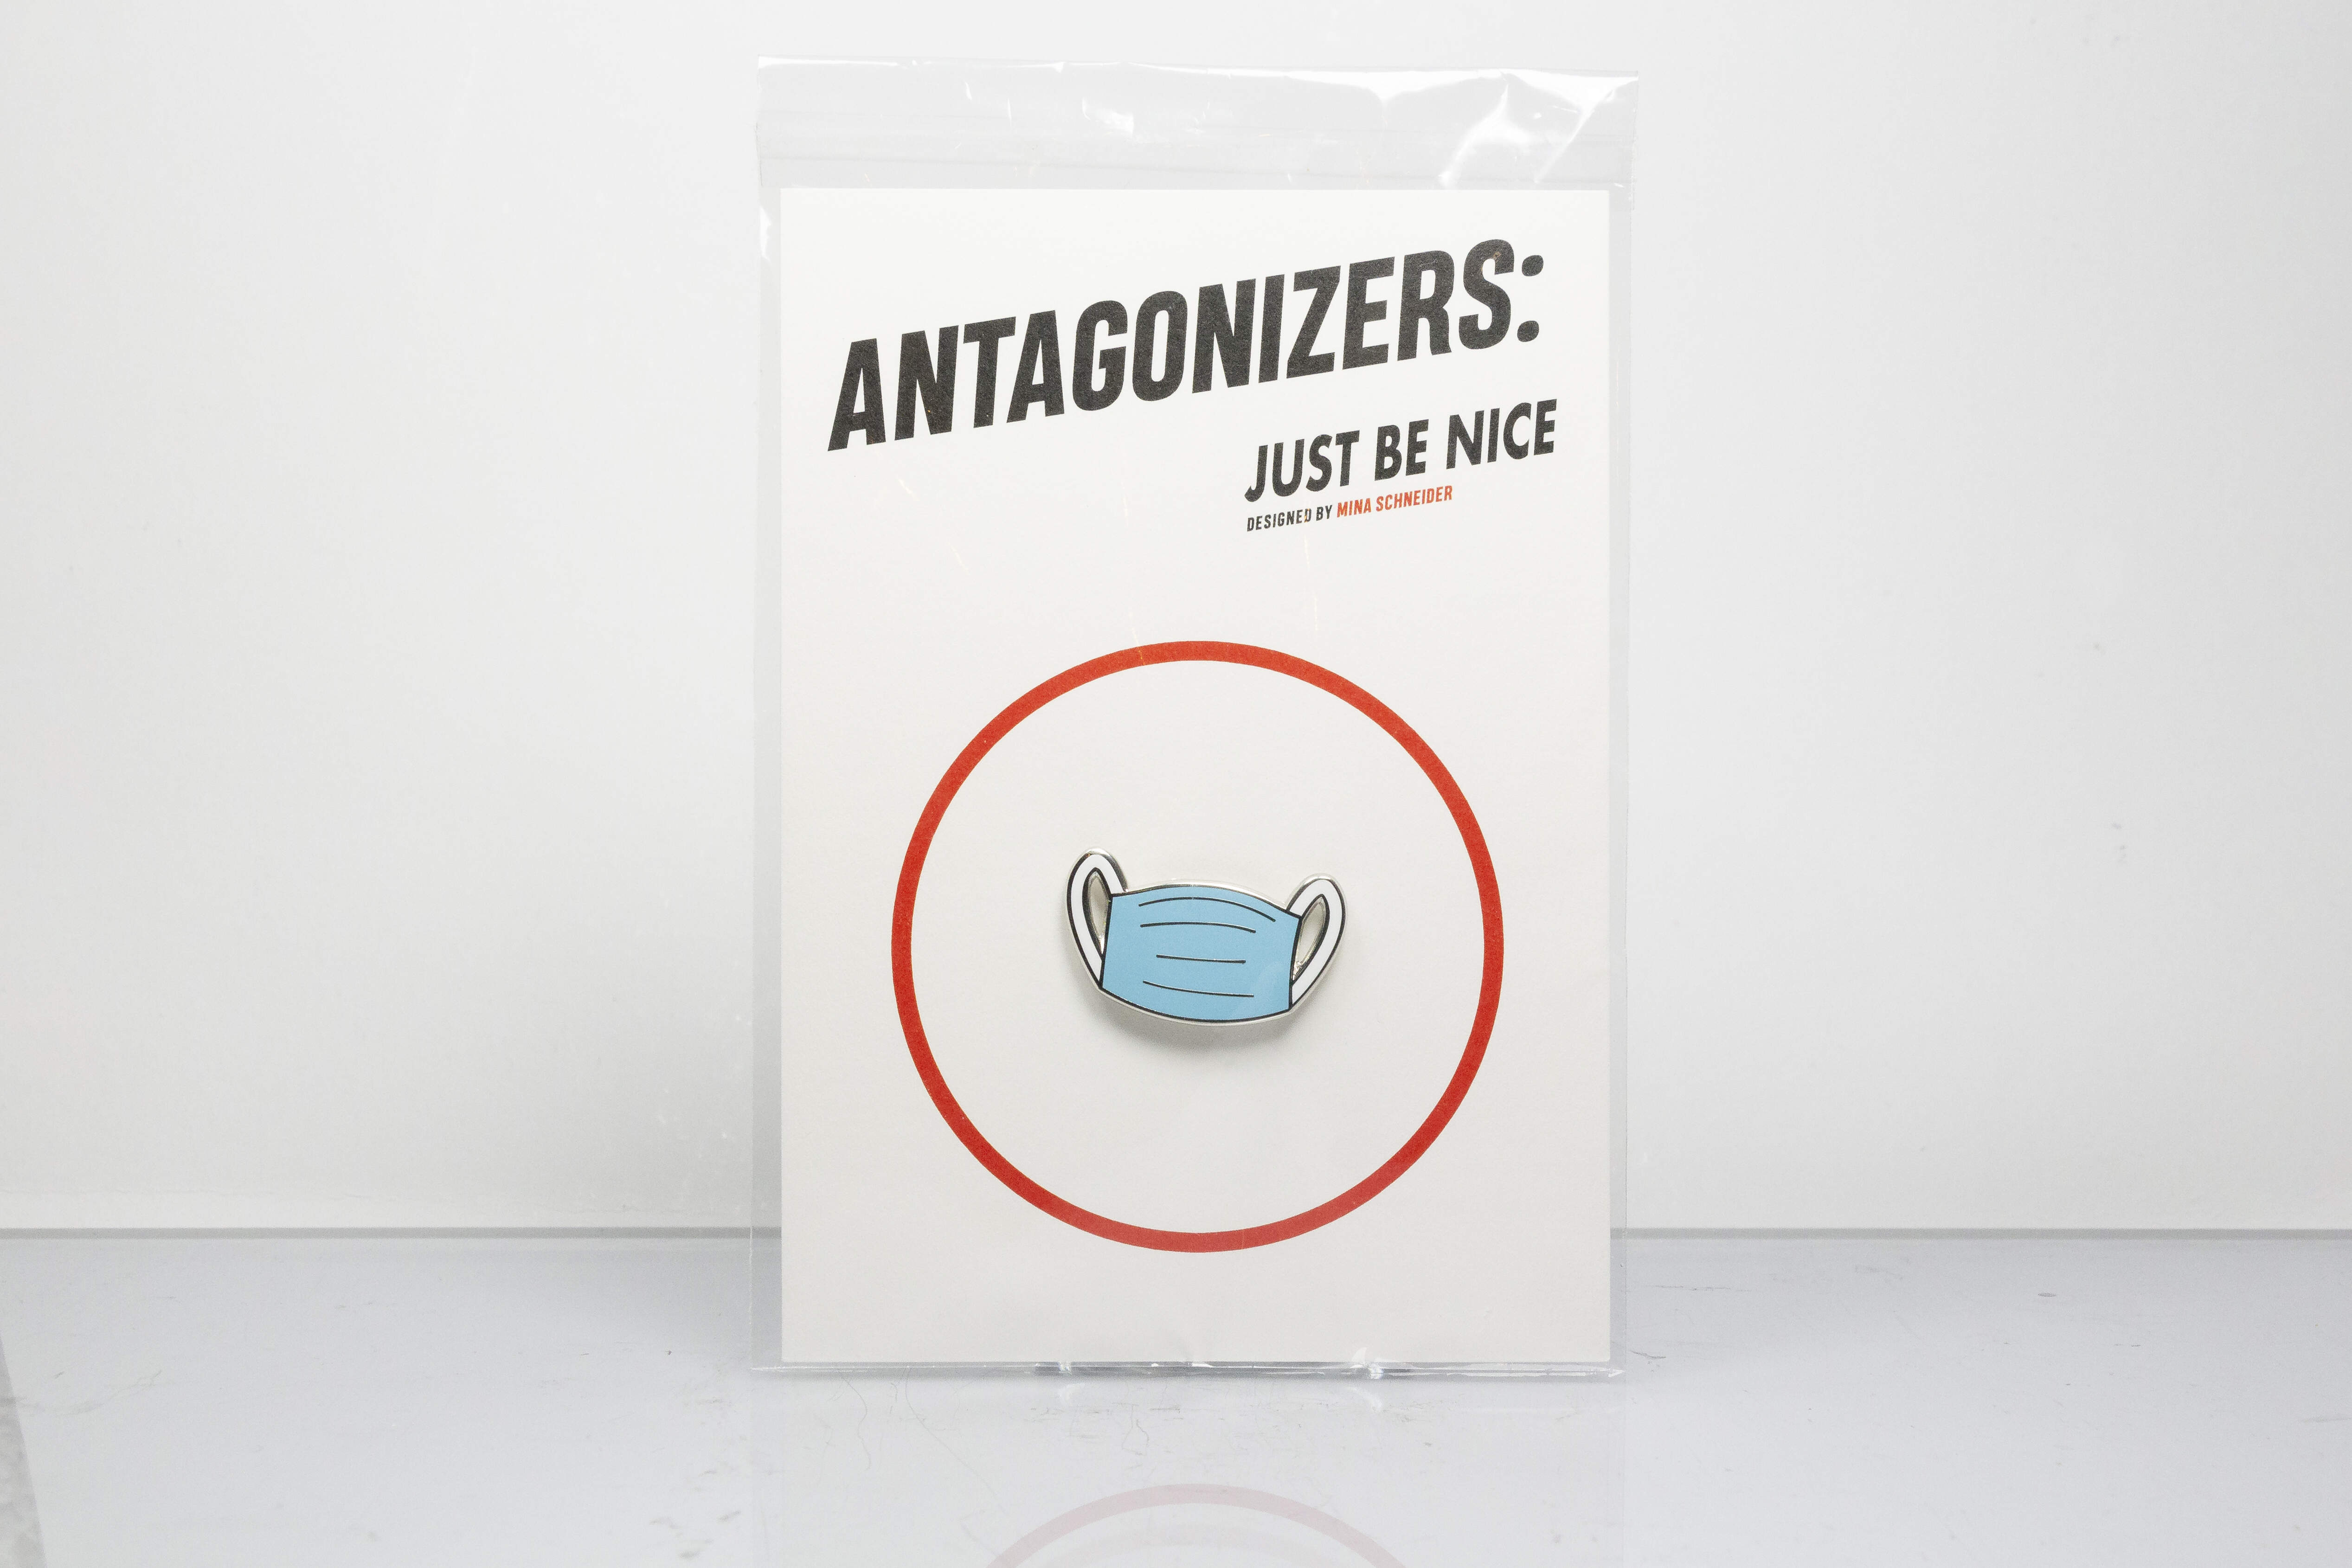 Antagonizers: Just be nice